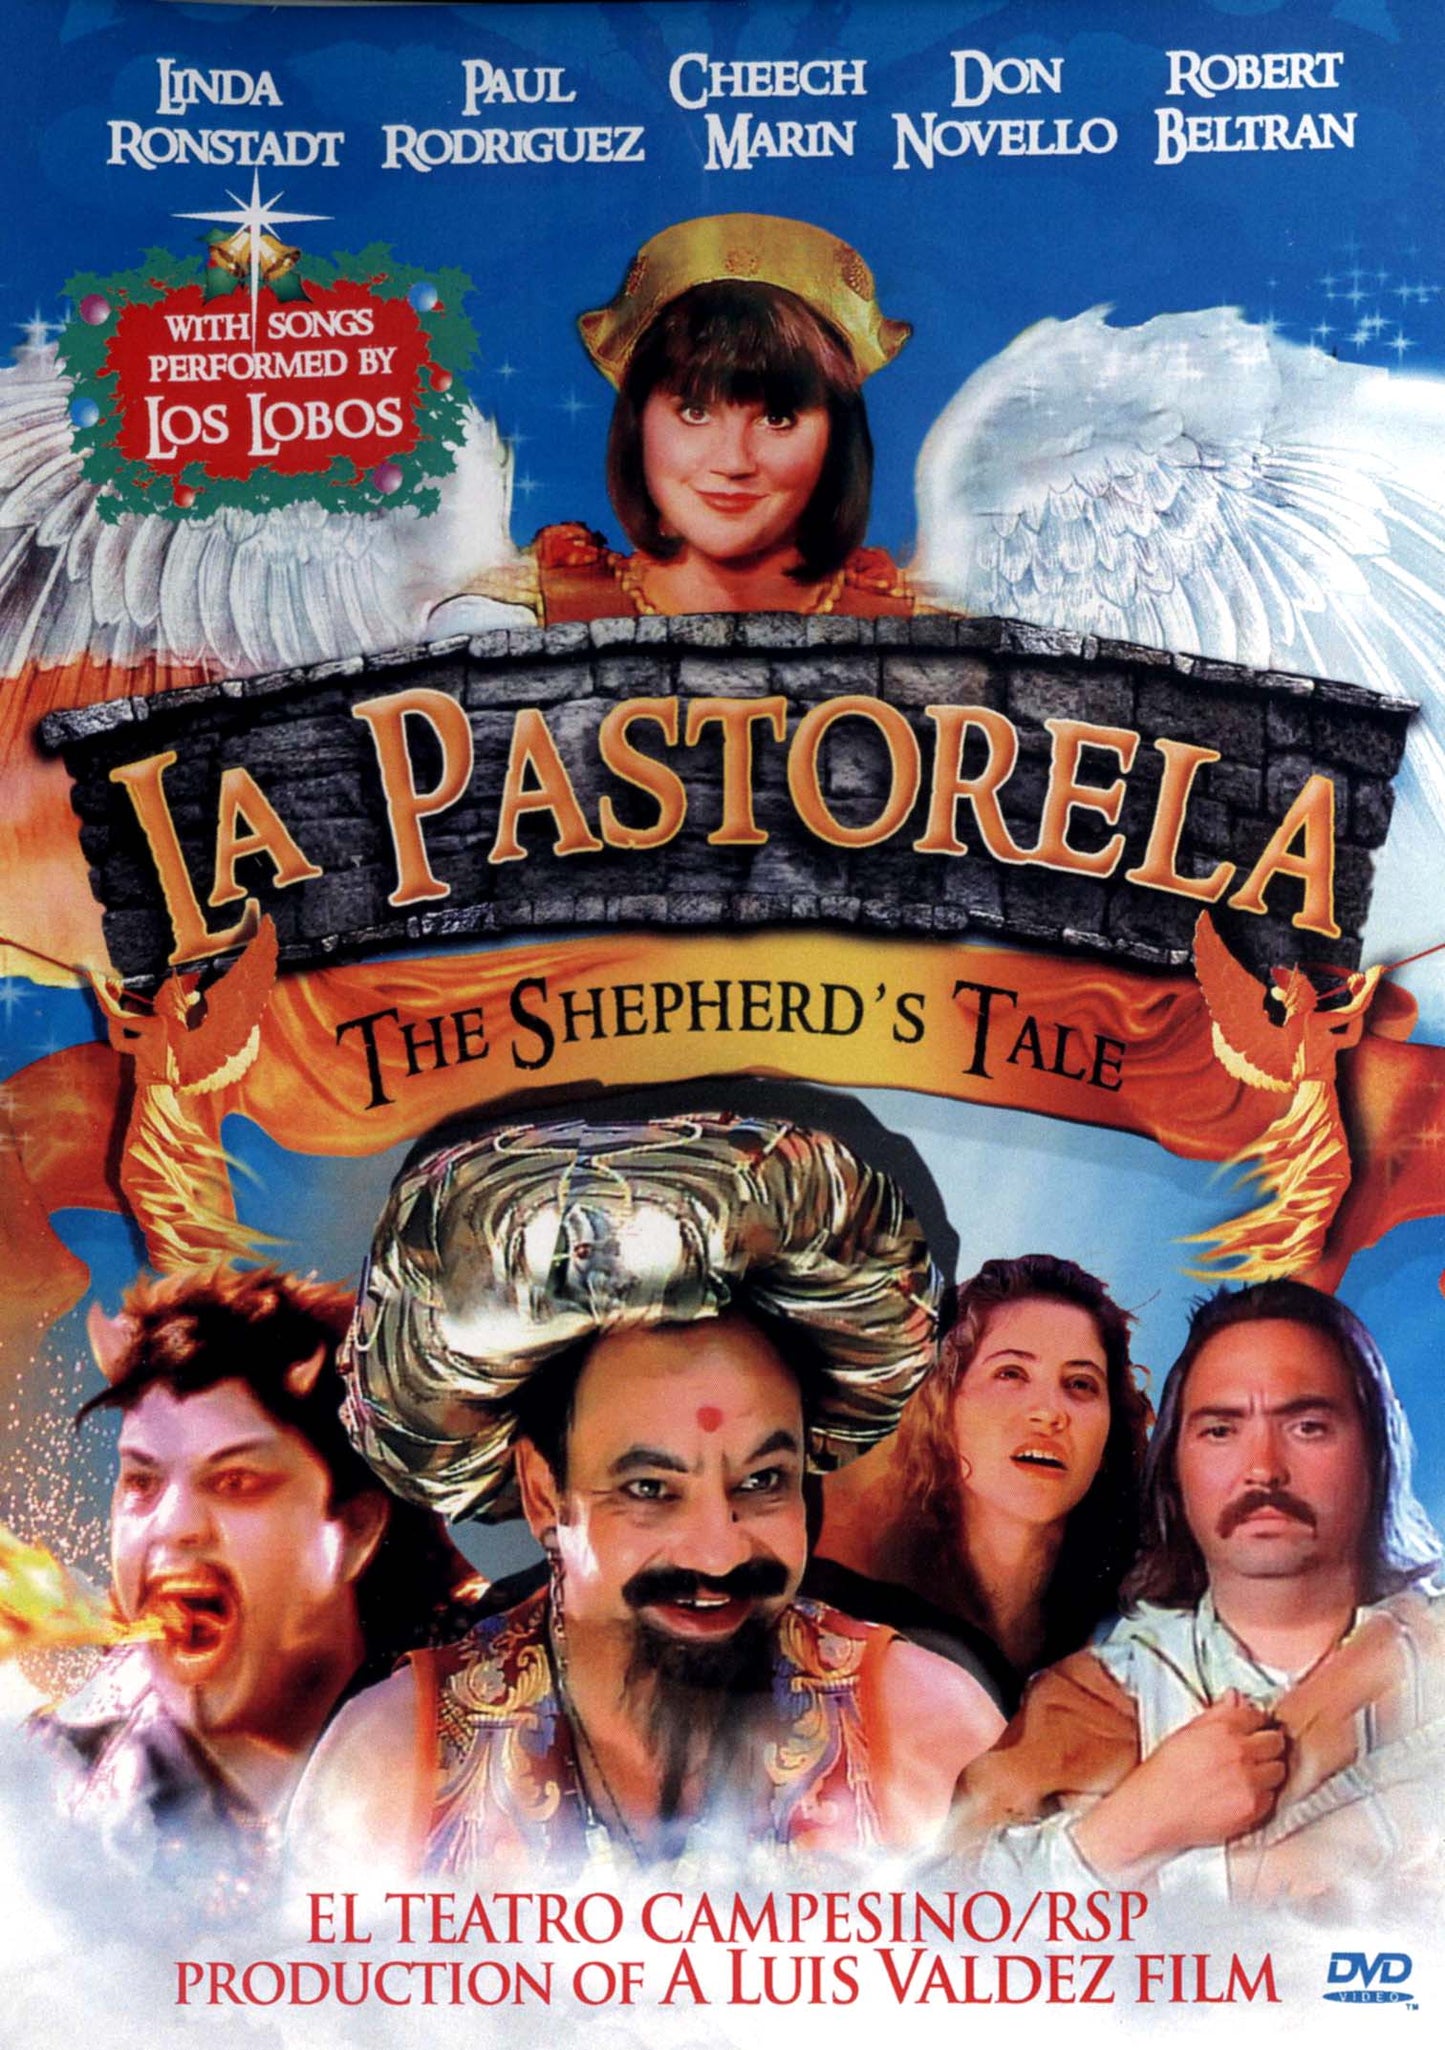 Pastorela cover art